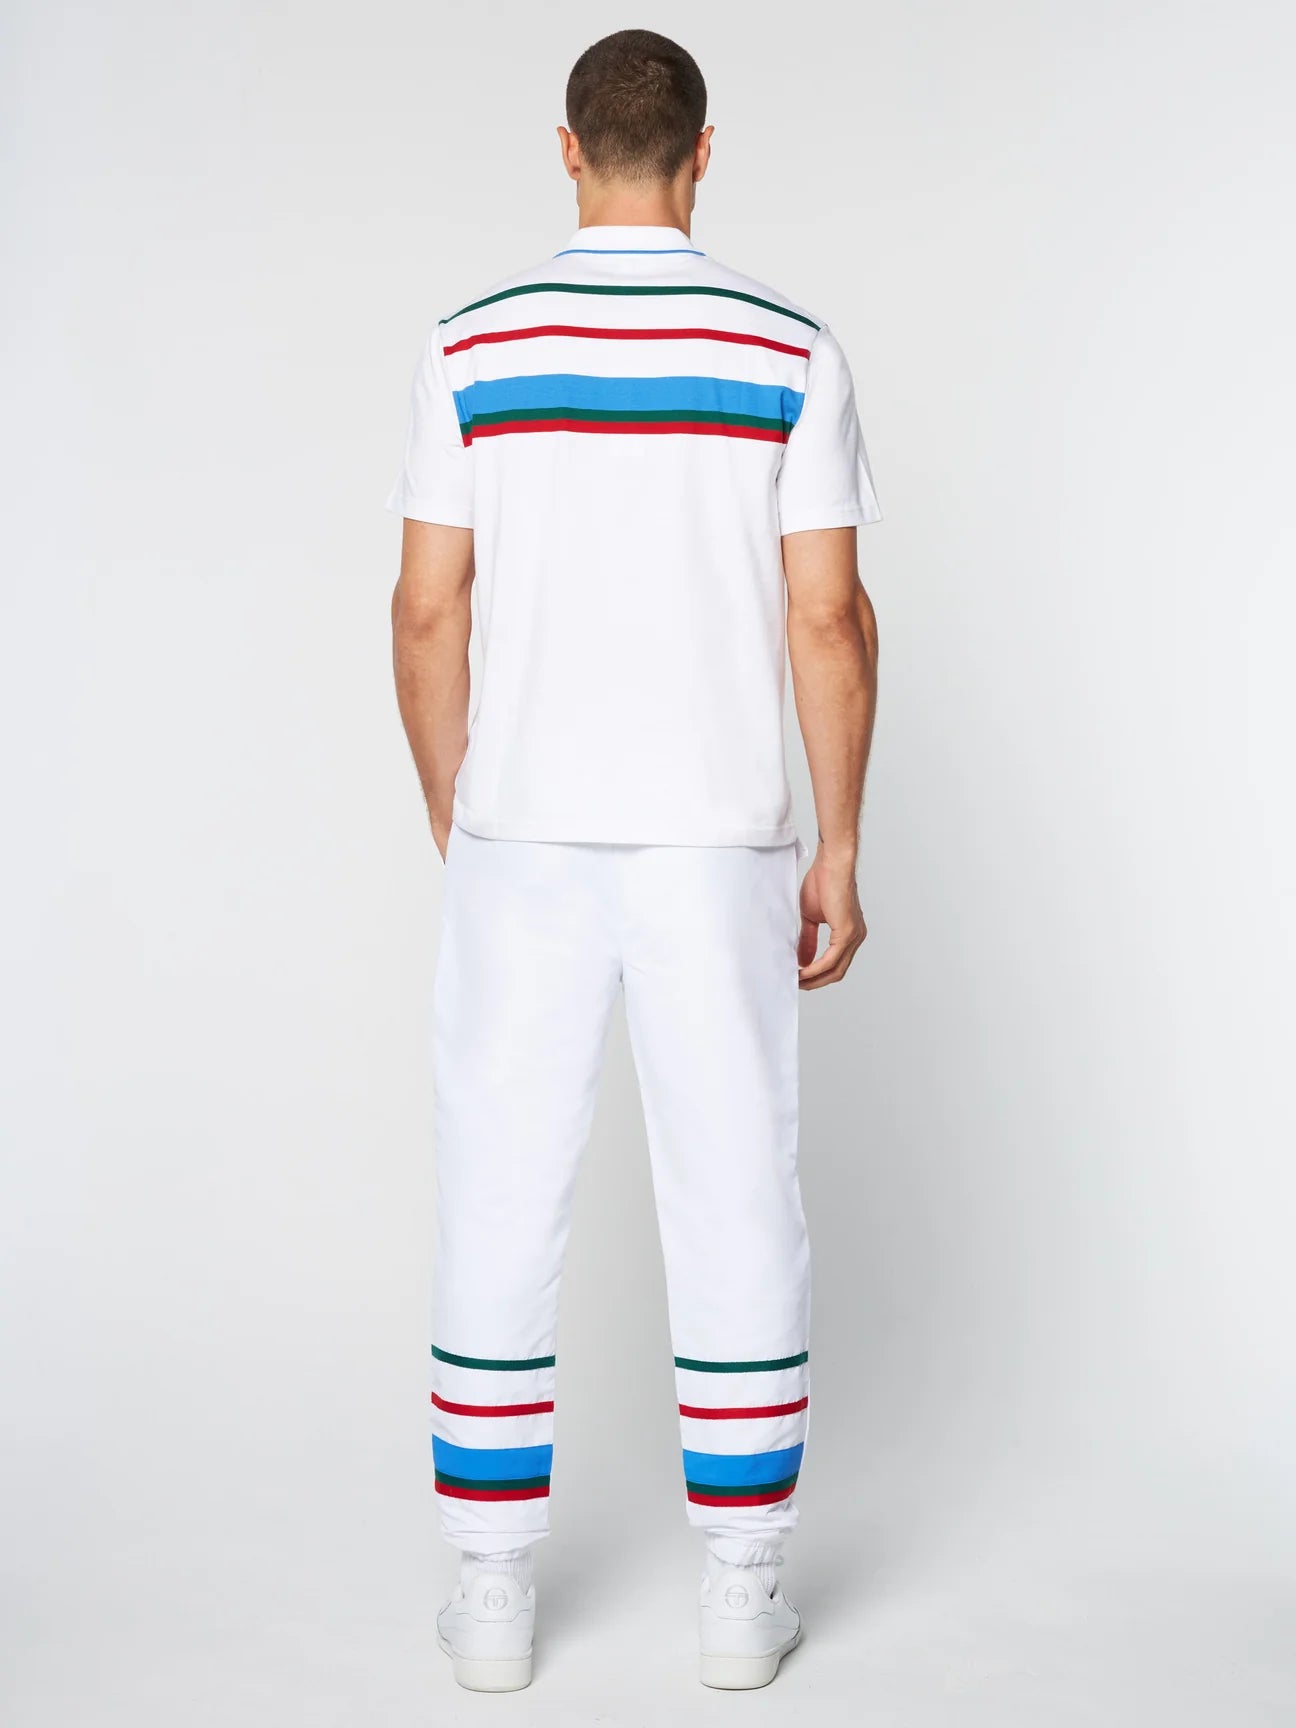 Sergio Tacchini Men's SS Denver Stripe Polo Shirt White